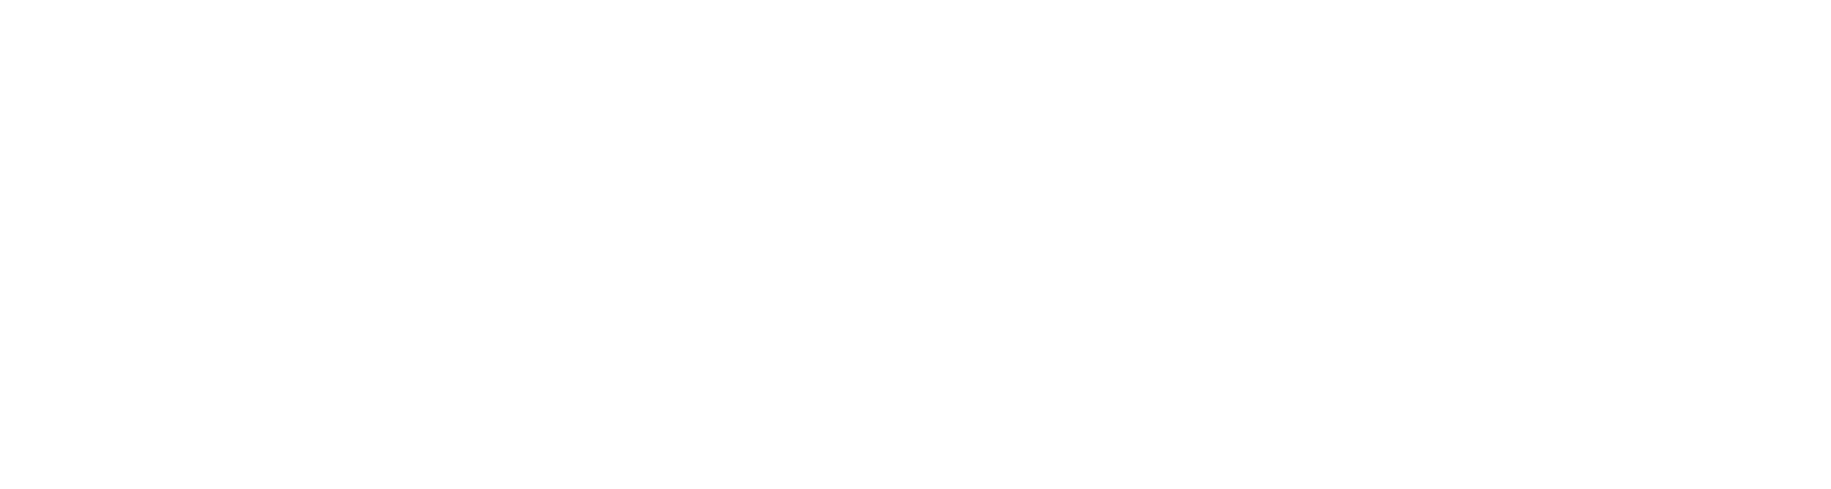 Pyszne.pl Partnerblog